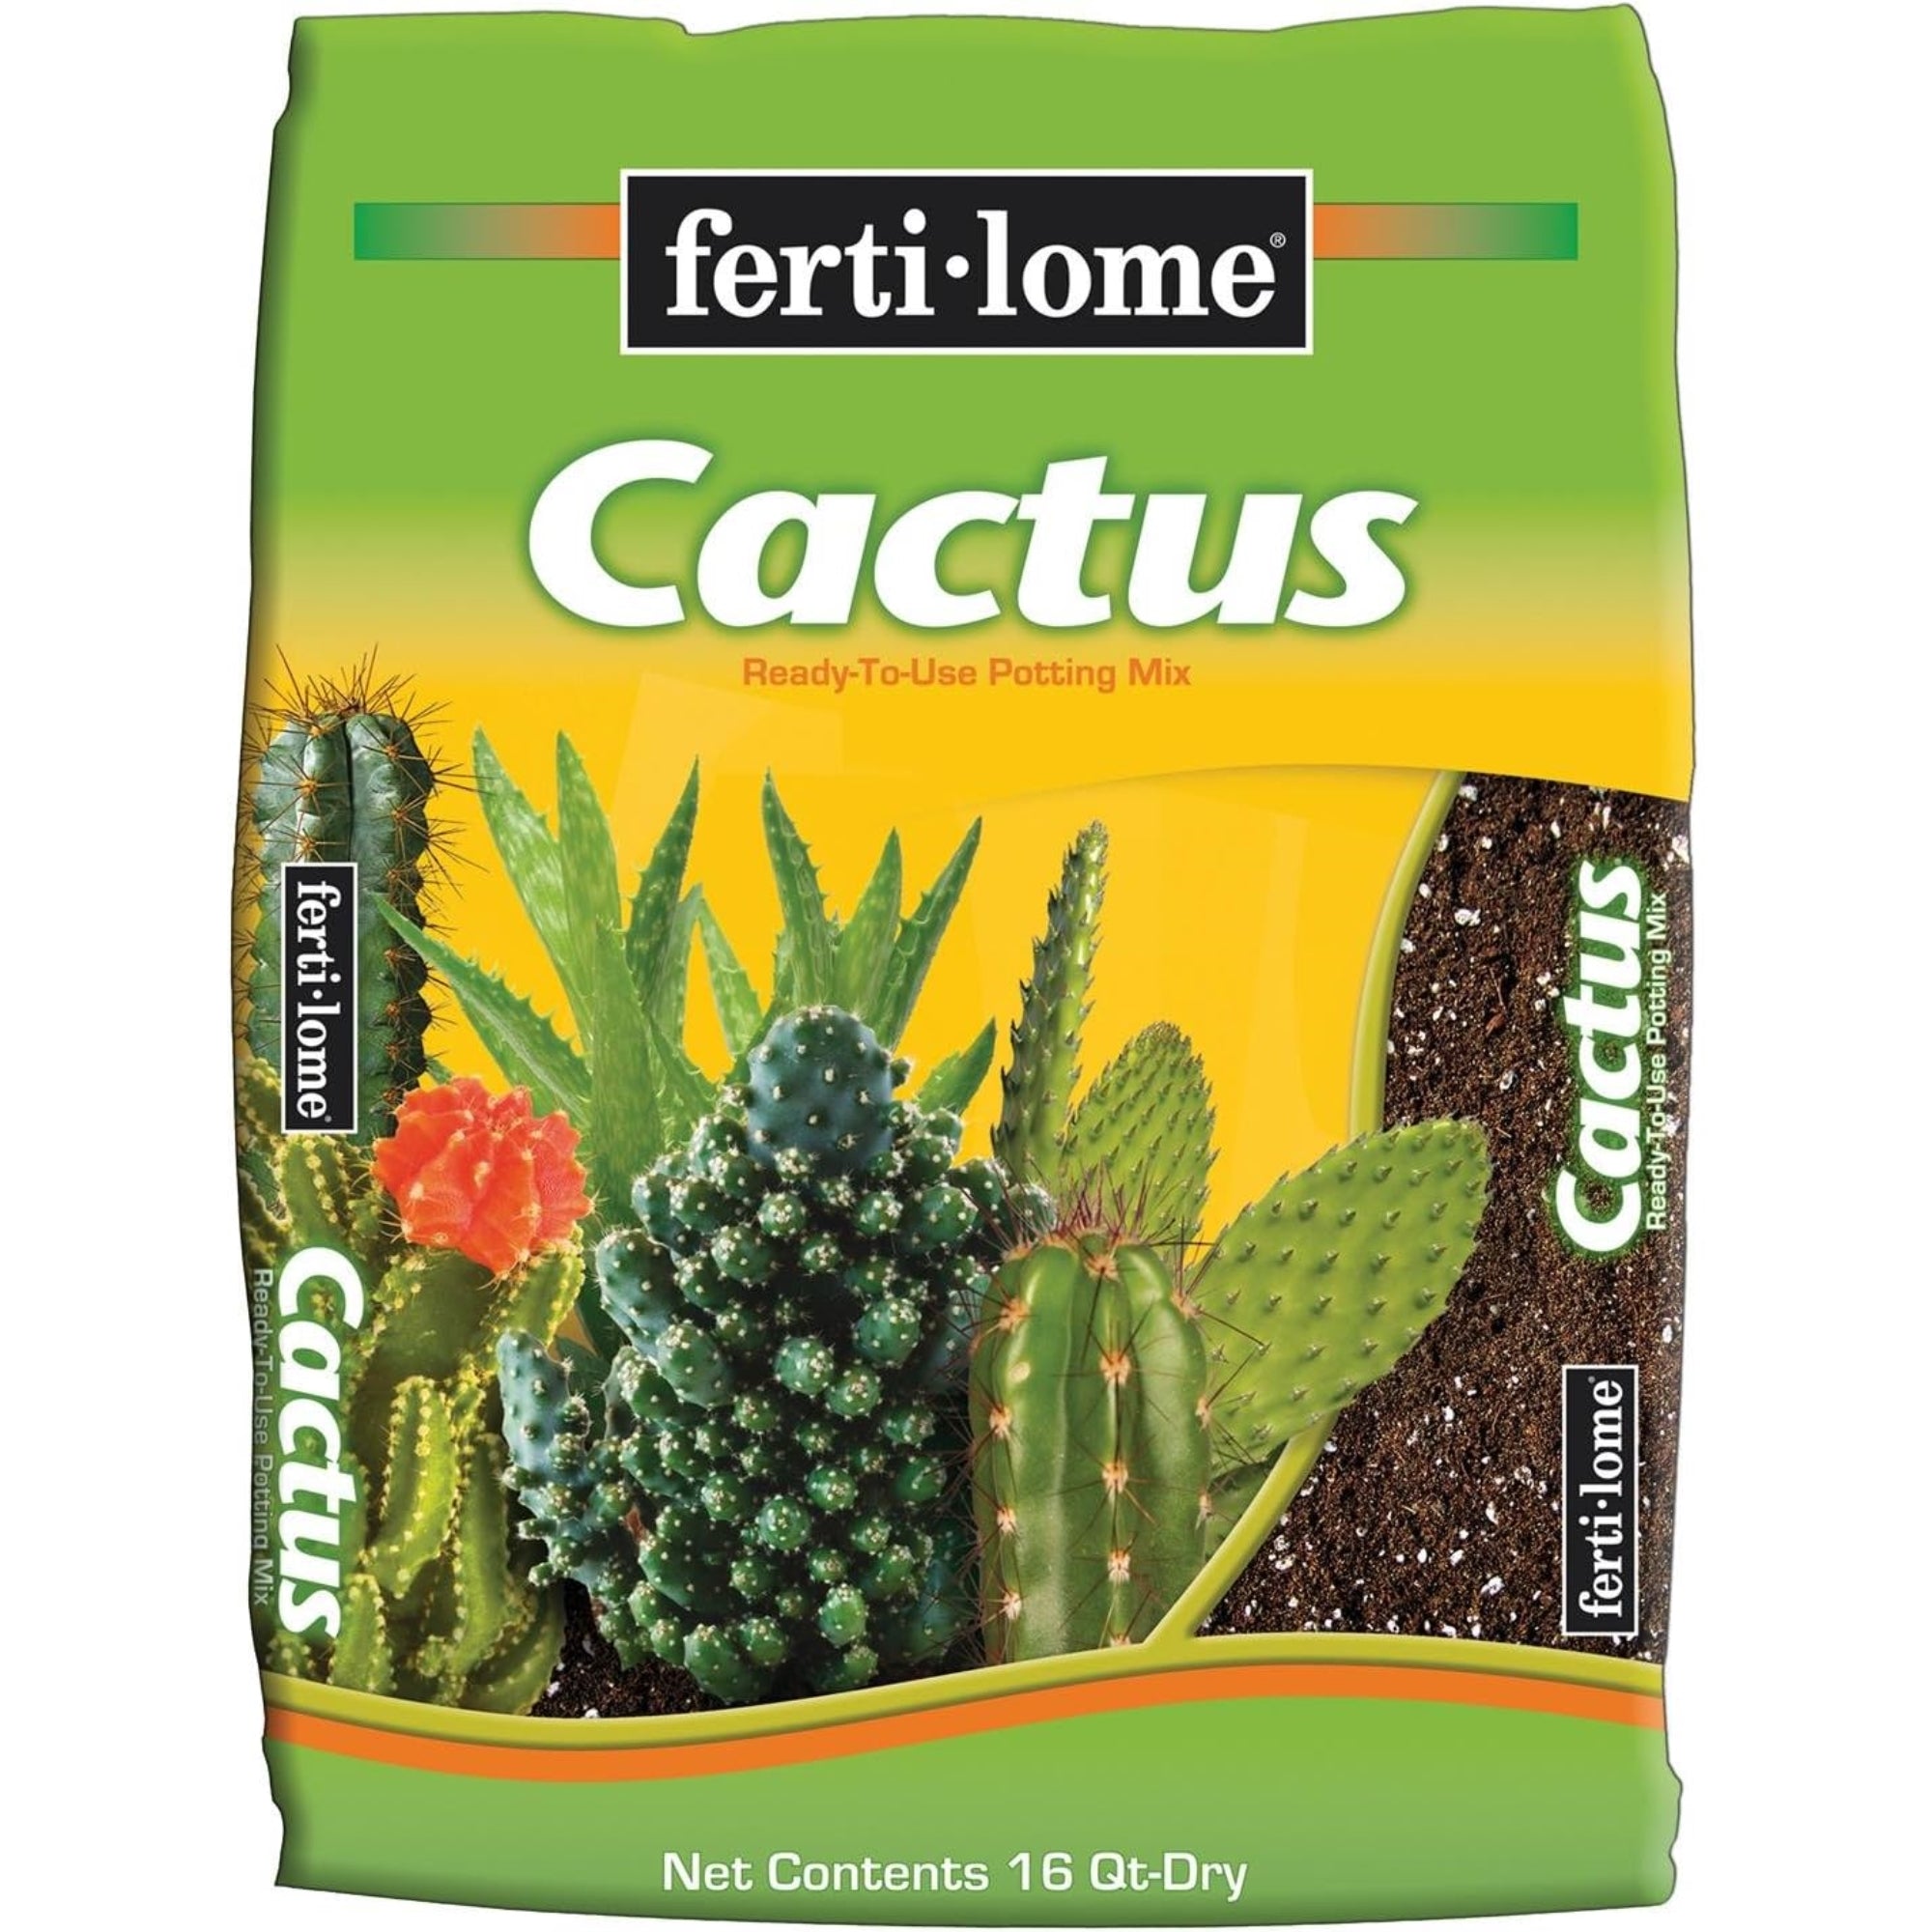 Fertilome Cactus Ready to Use Potting Mix Soil, Fast Draining, 16 qts